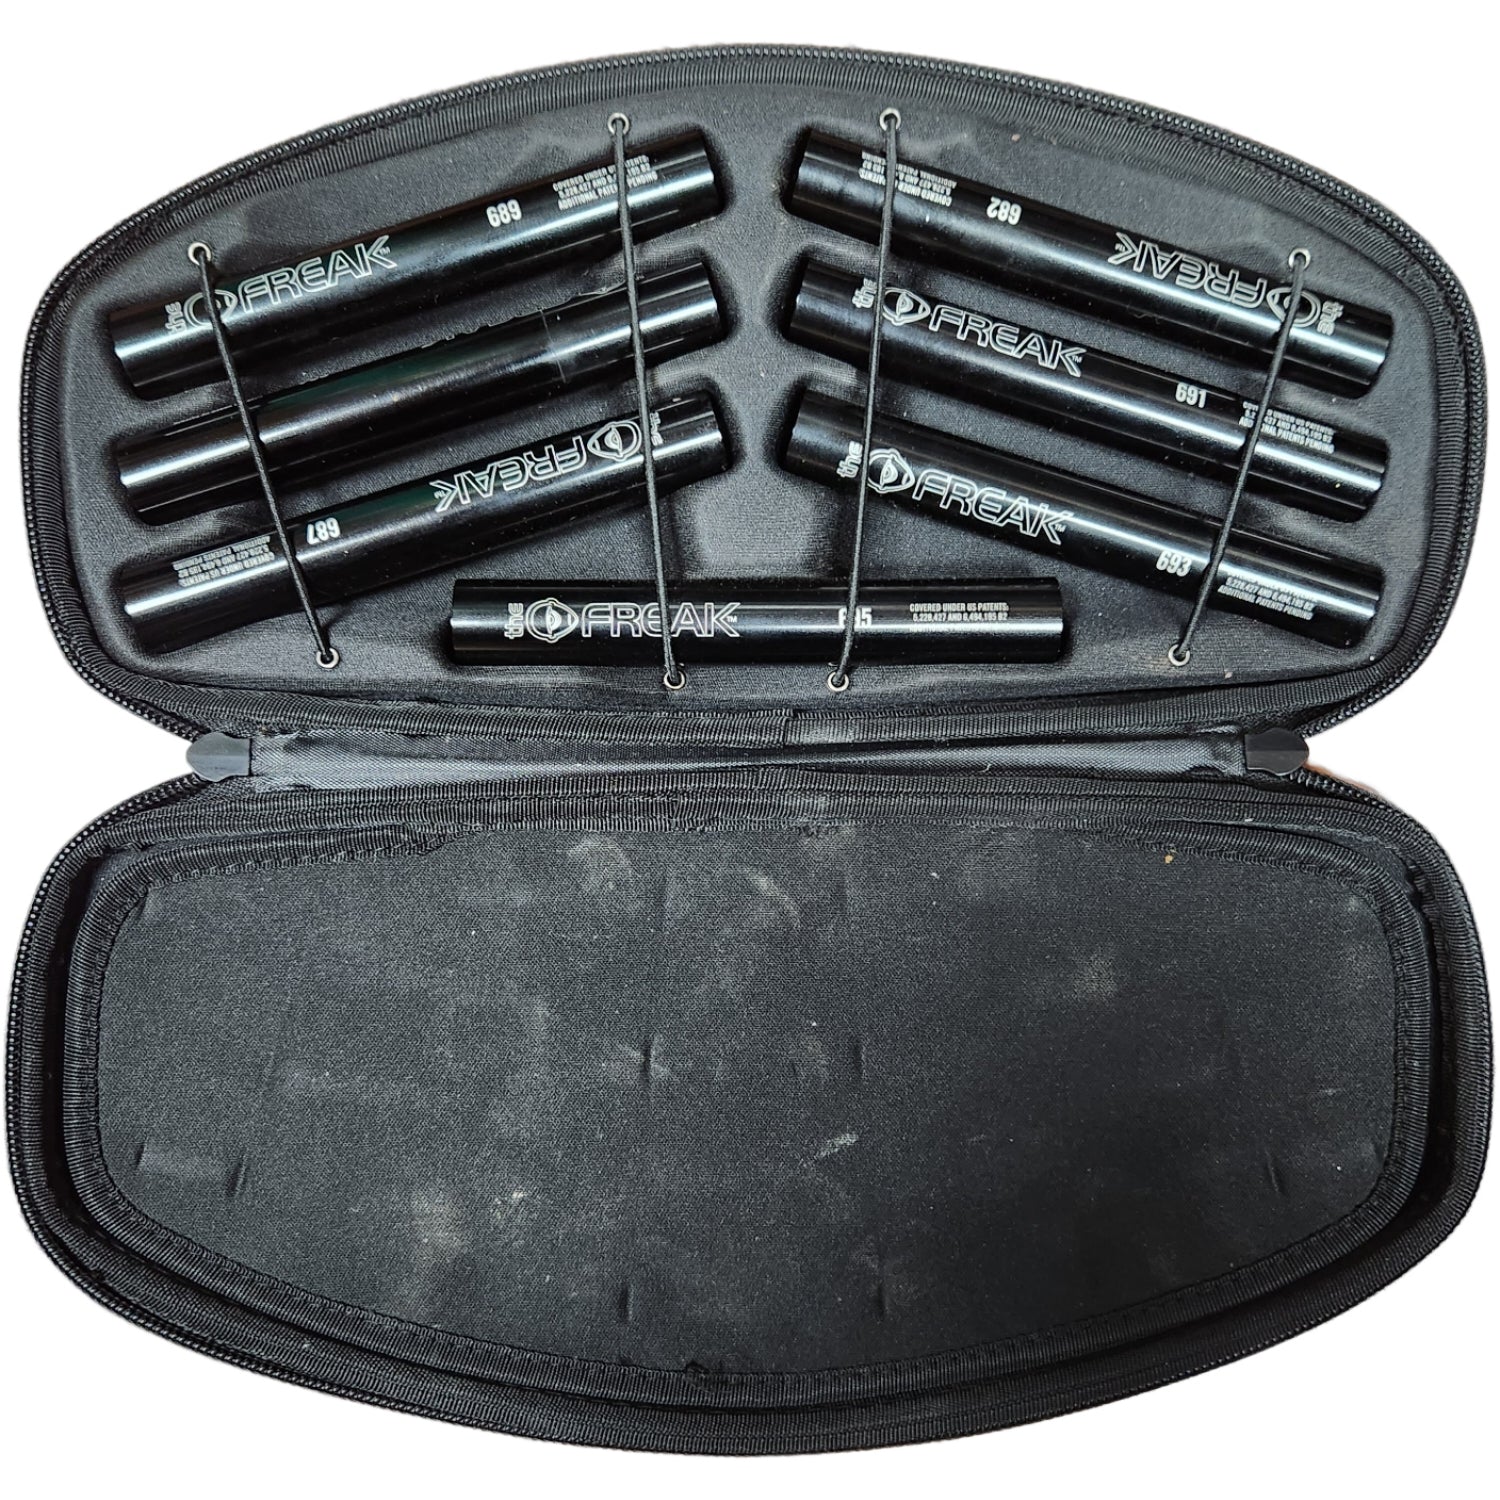 Standard Freak Boremaster Kit (Used) - Aluminum (Black)